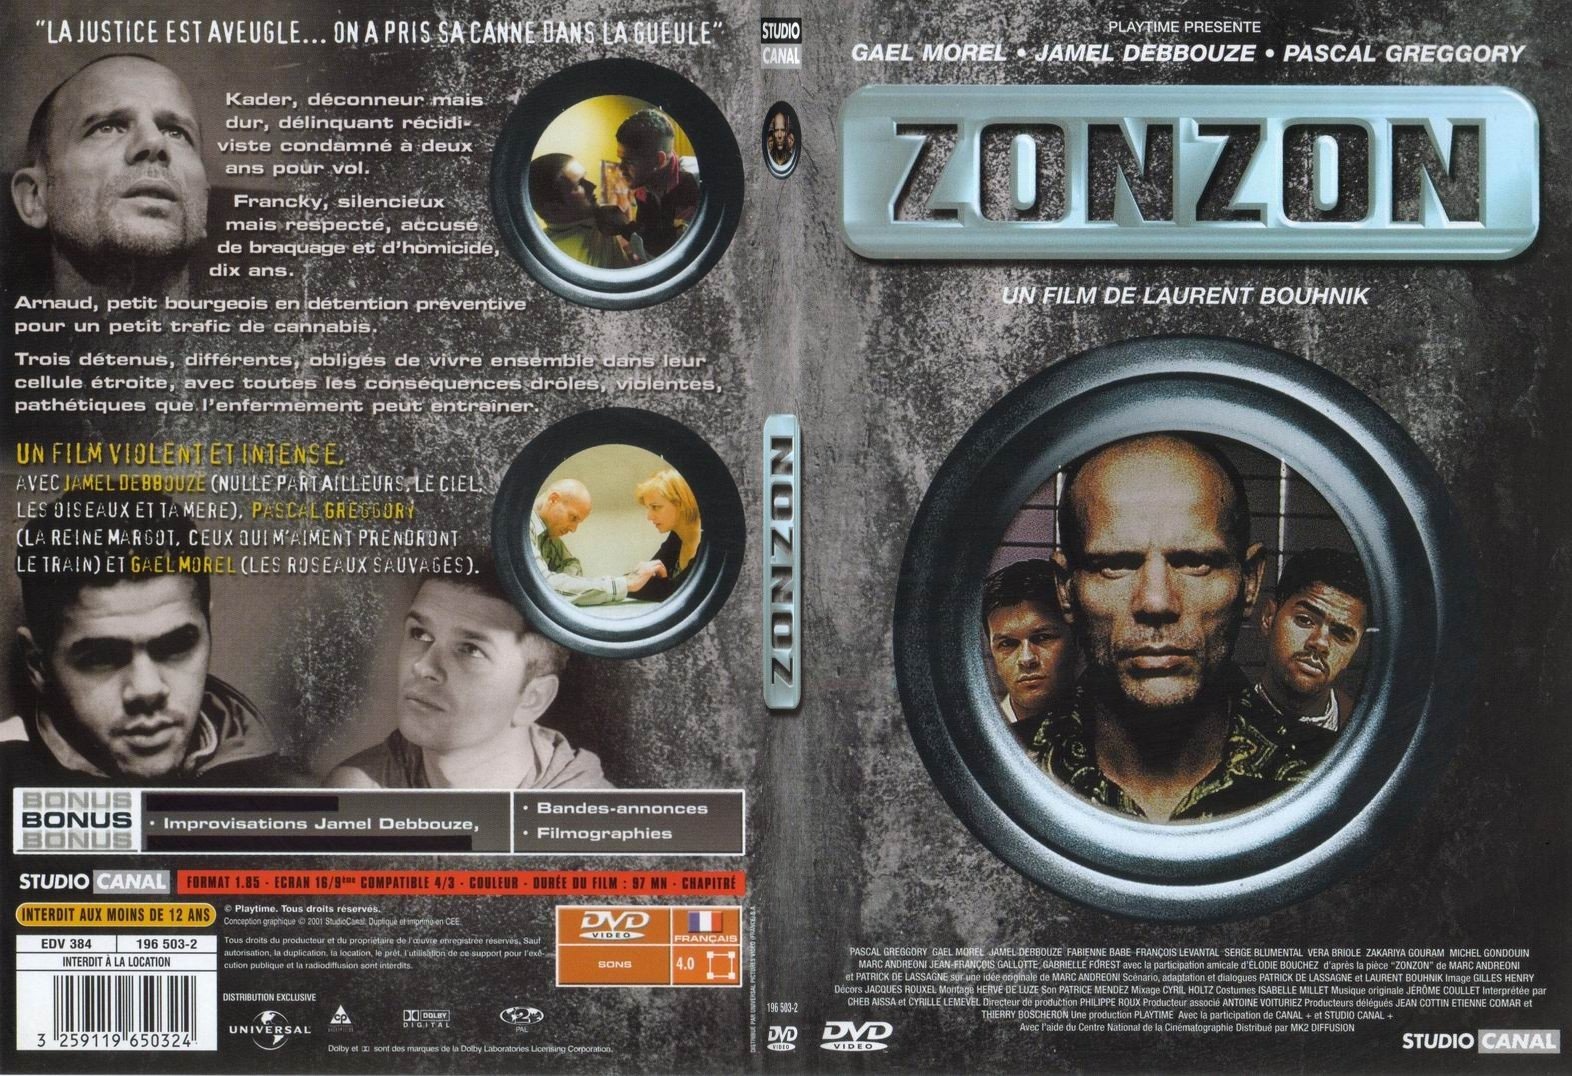 Jaquette DVD Zonzon - SLIM